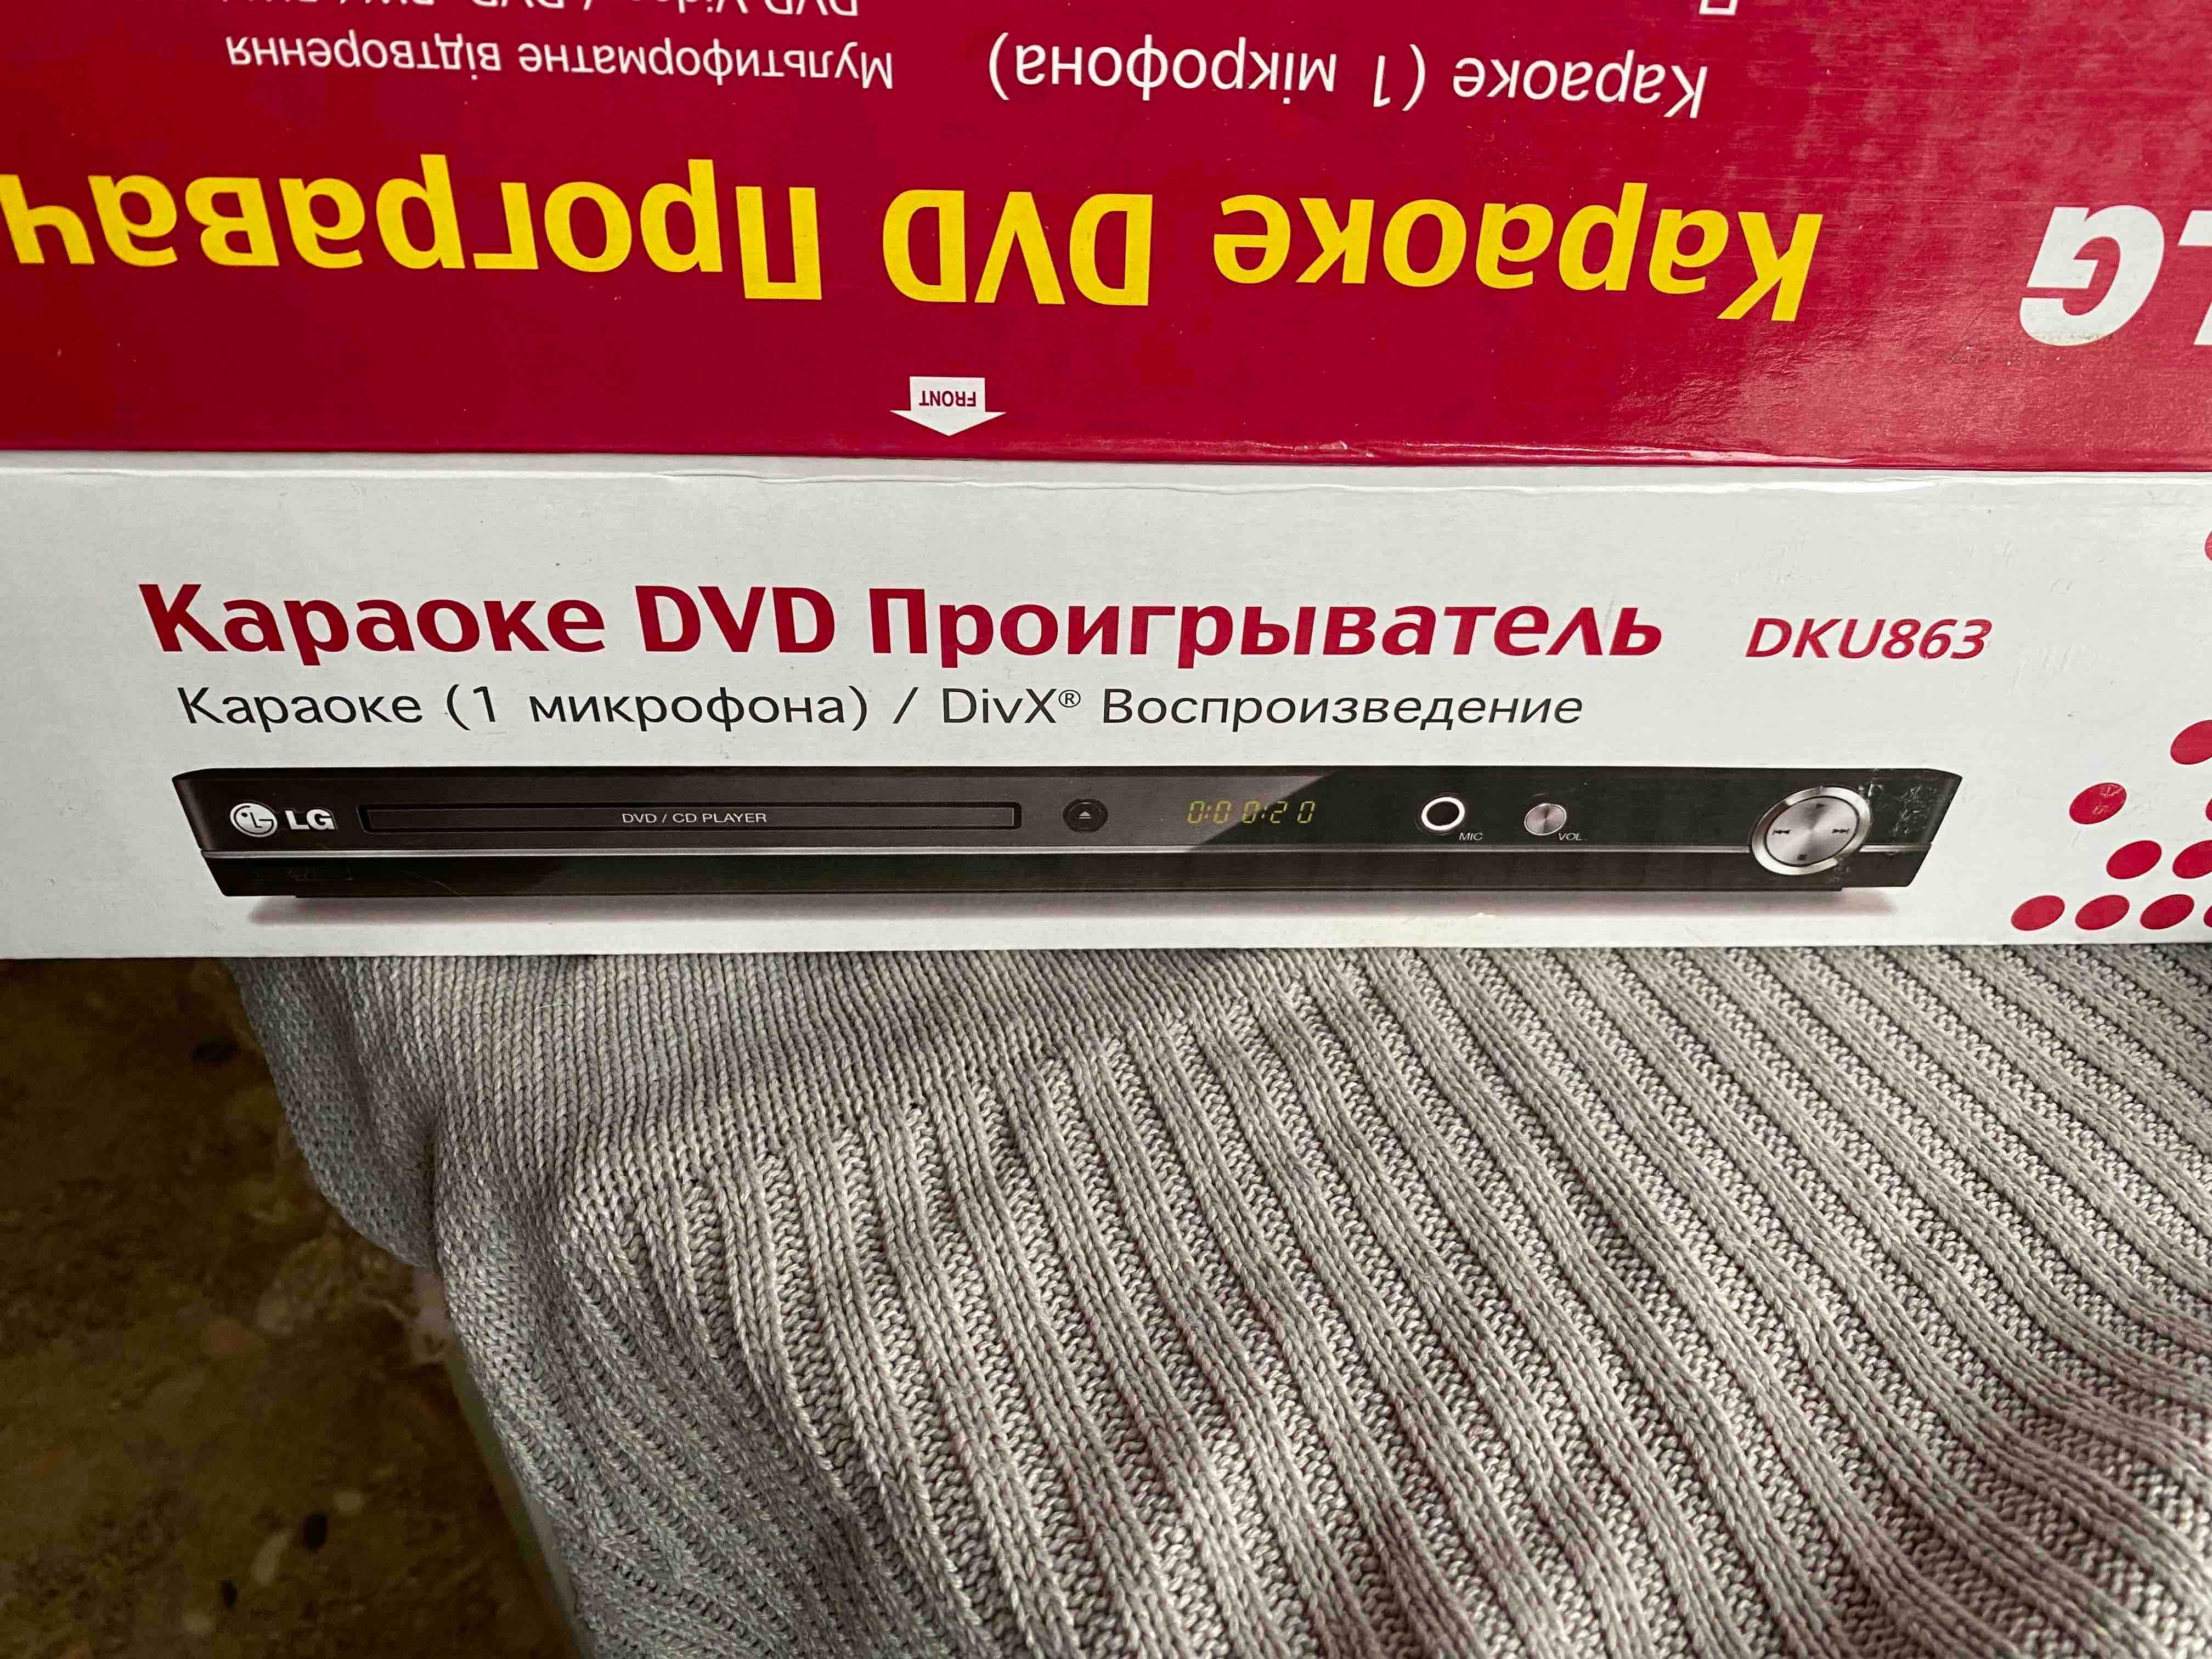 DVD-плеер LG DKU-863 + караоке